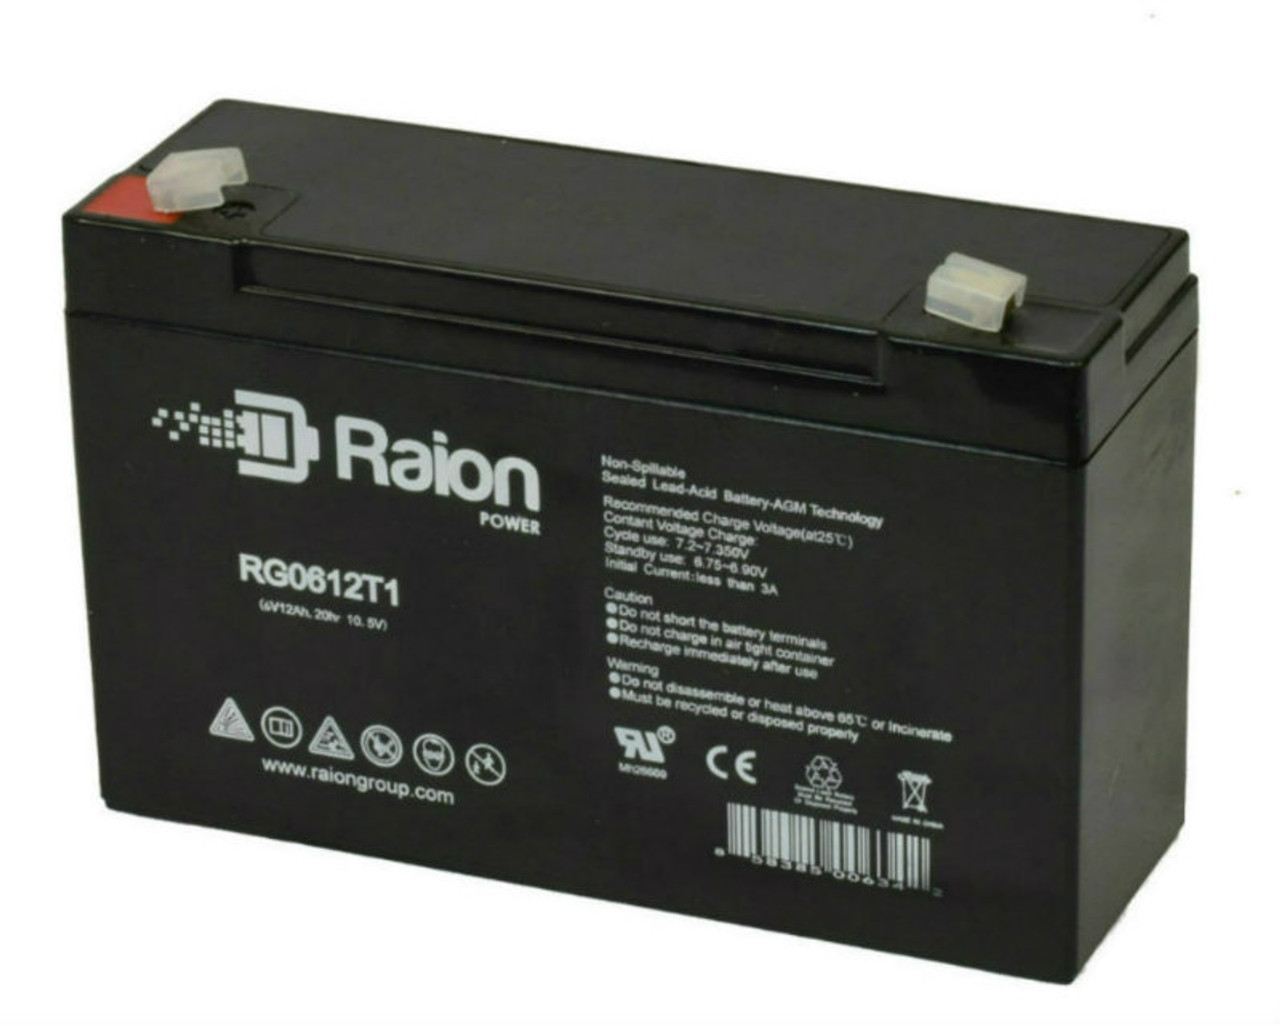 Raion Power RG06120T1 Replacement 6V 12Ah Emergency Light Battery for Elan GB6V84063